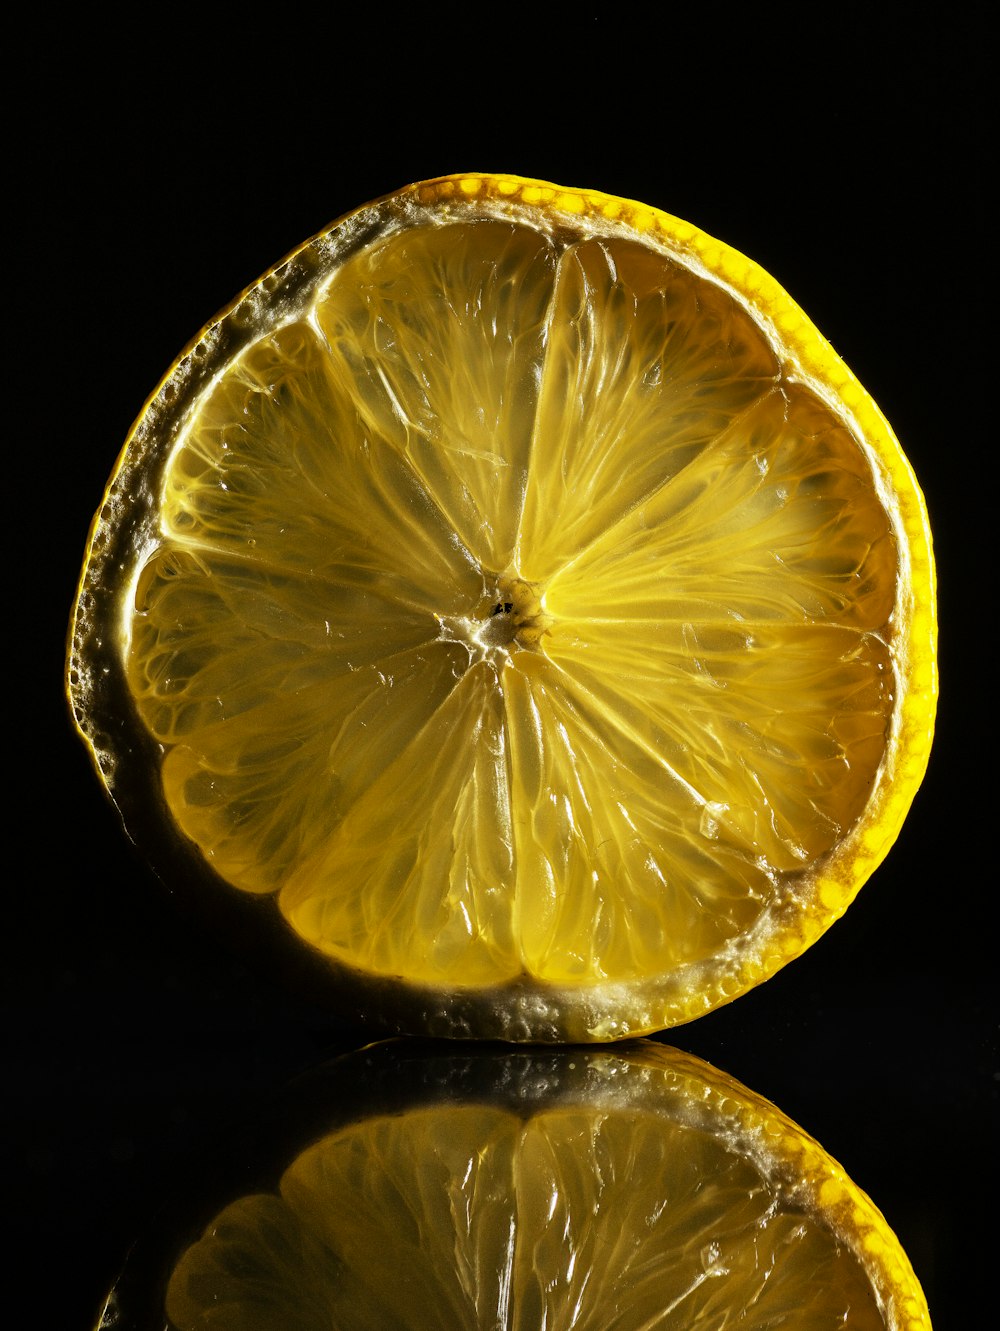 a close up of a sliced lemon on a black background